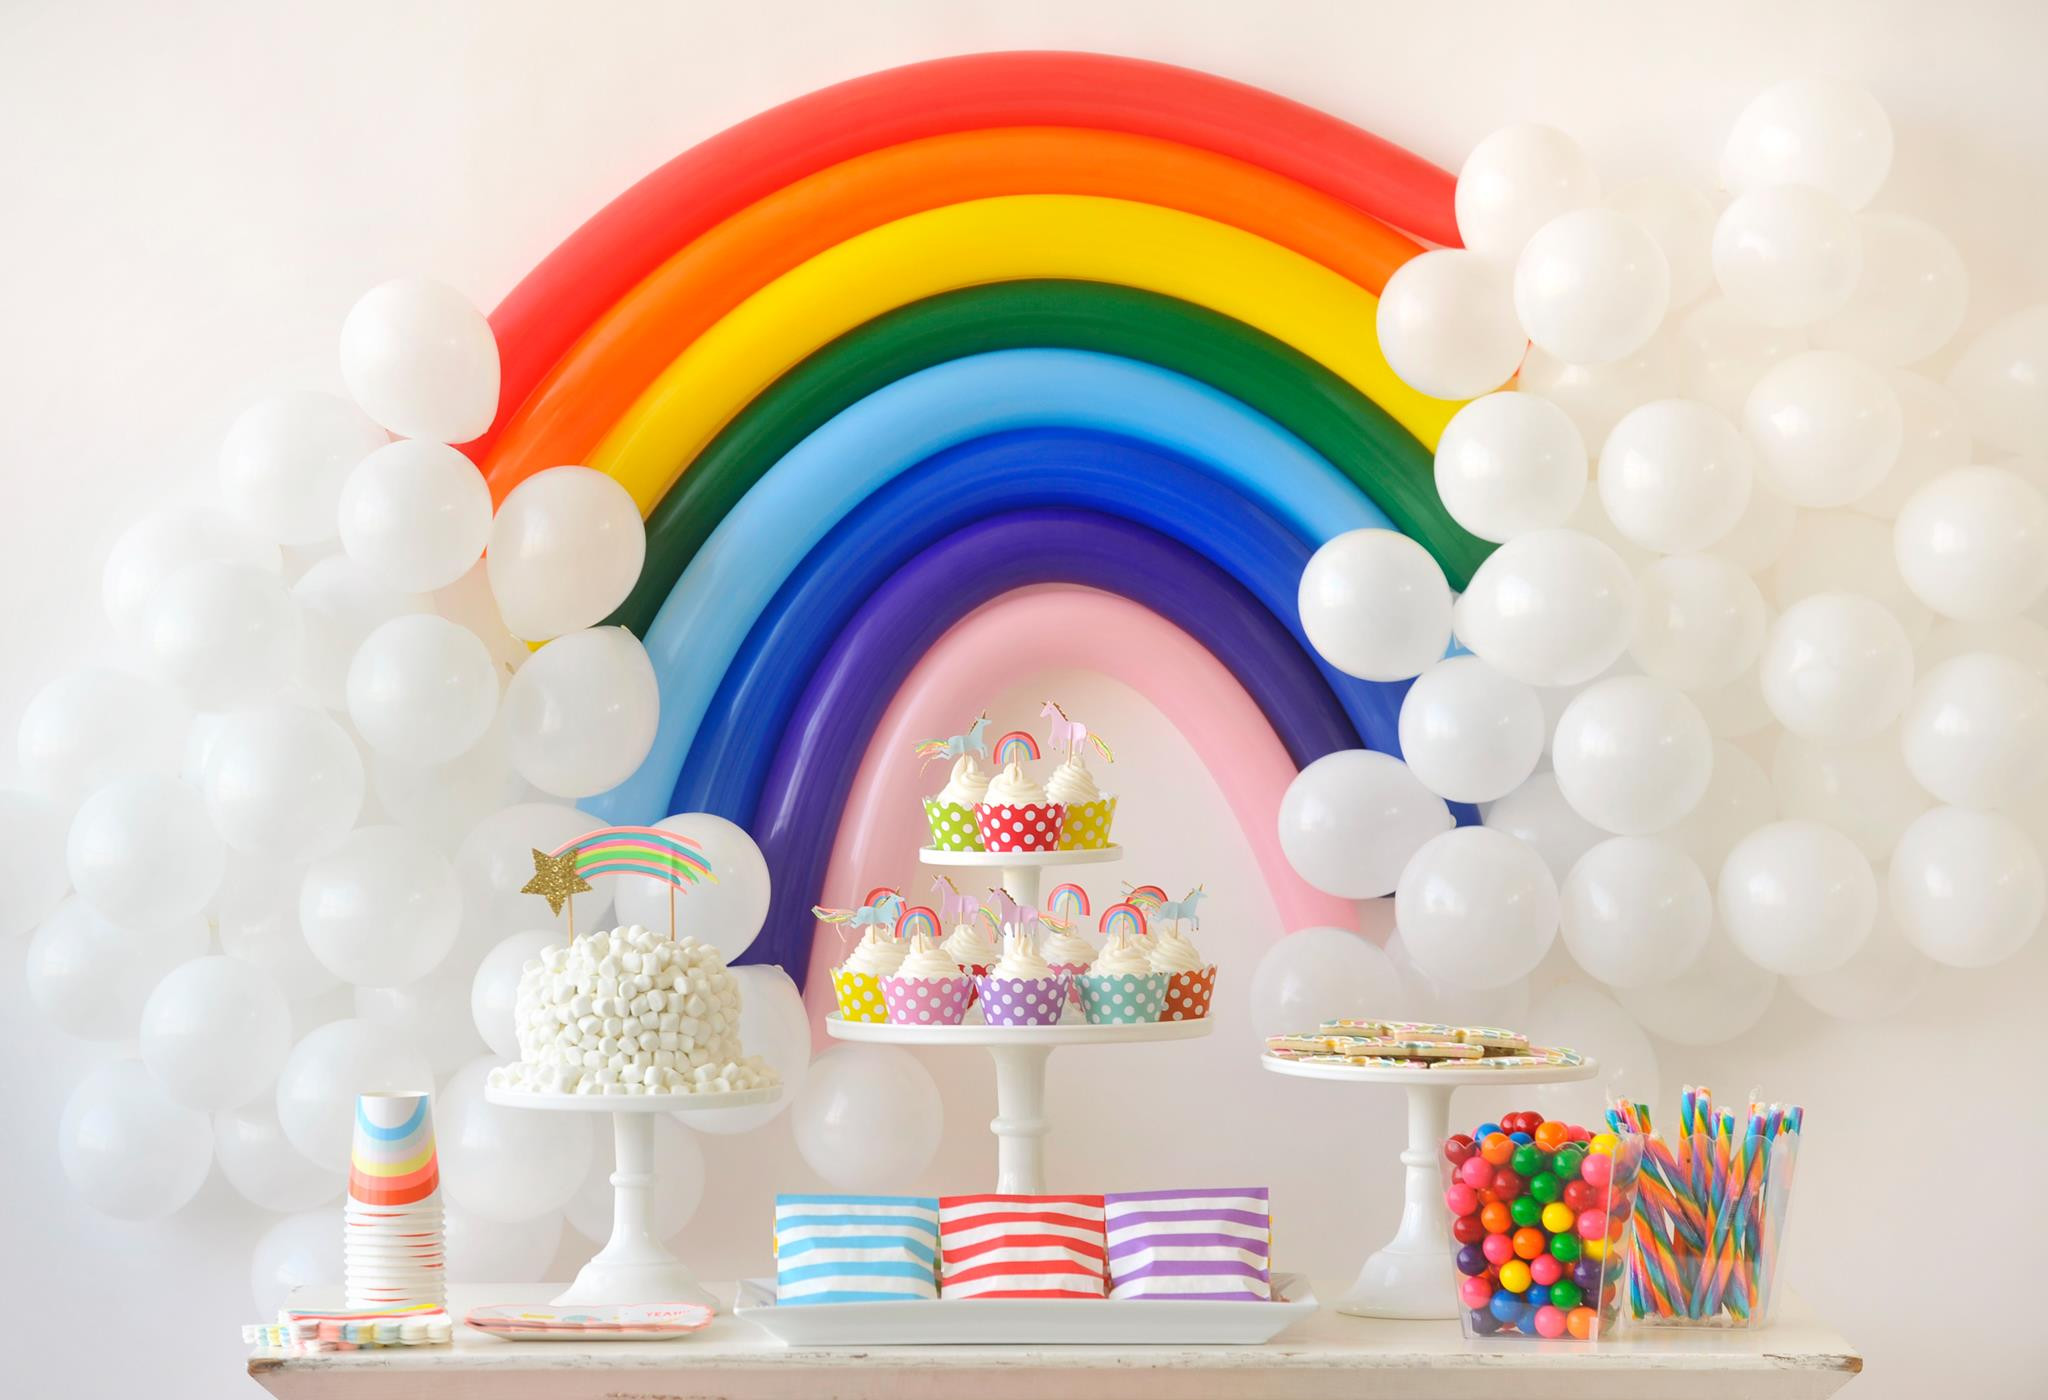 Rainbow Birthday Party Ideas
 Over the Rainbow Birthday Party for Kids Project Nursery